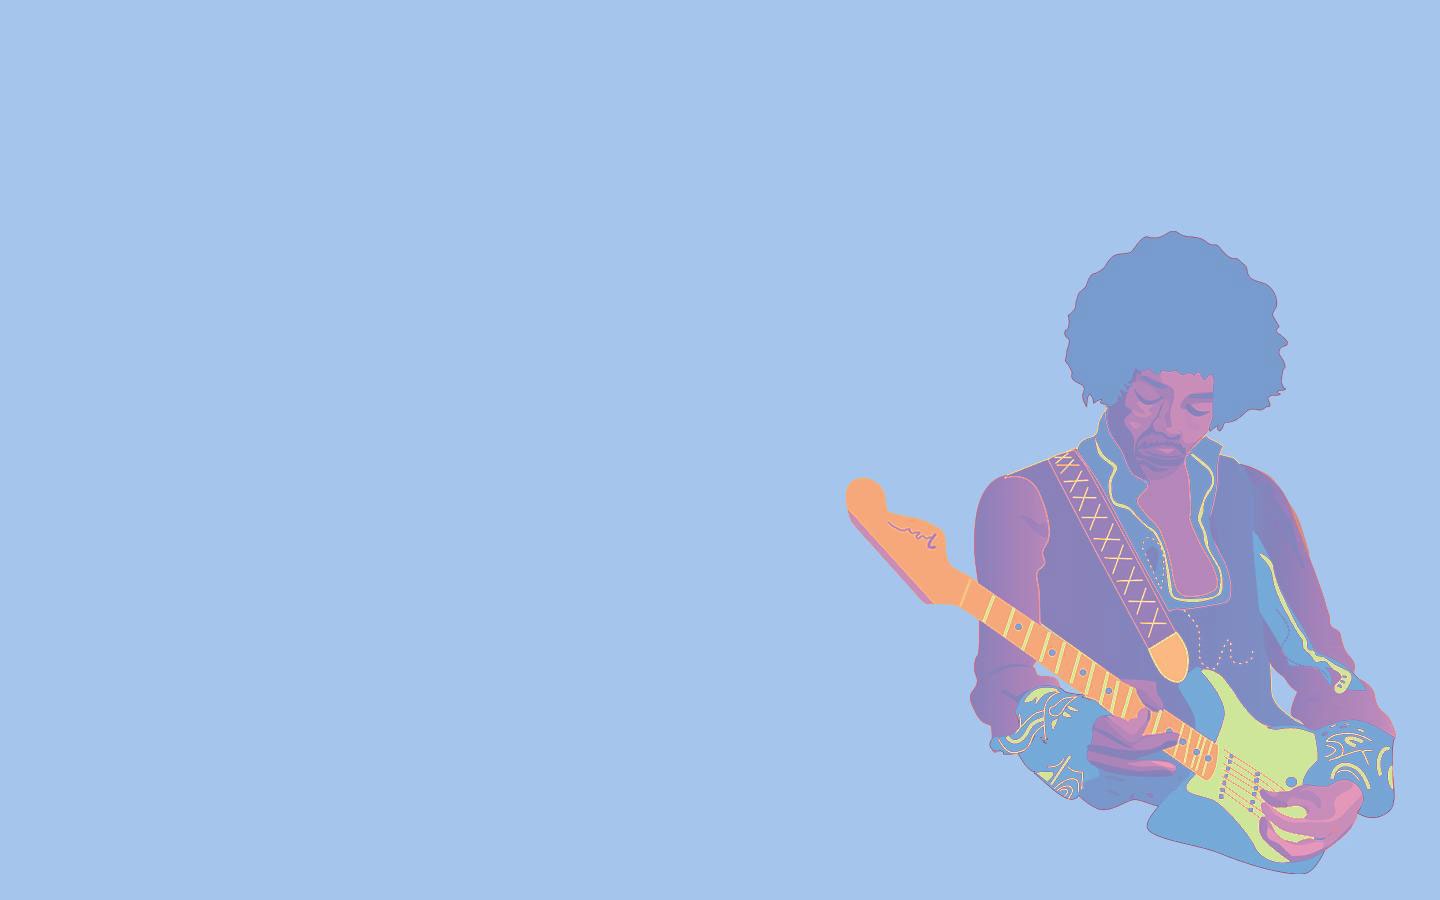 Jimi Hendrix 1080P, 2K, 4K, 5K HD wallpapers free download | Wallpaper Flare